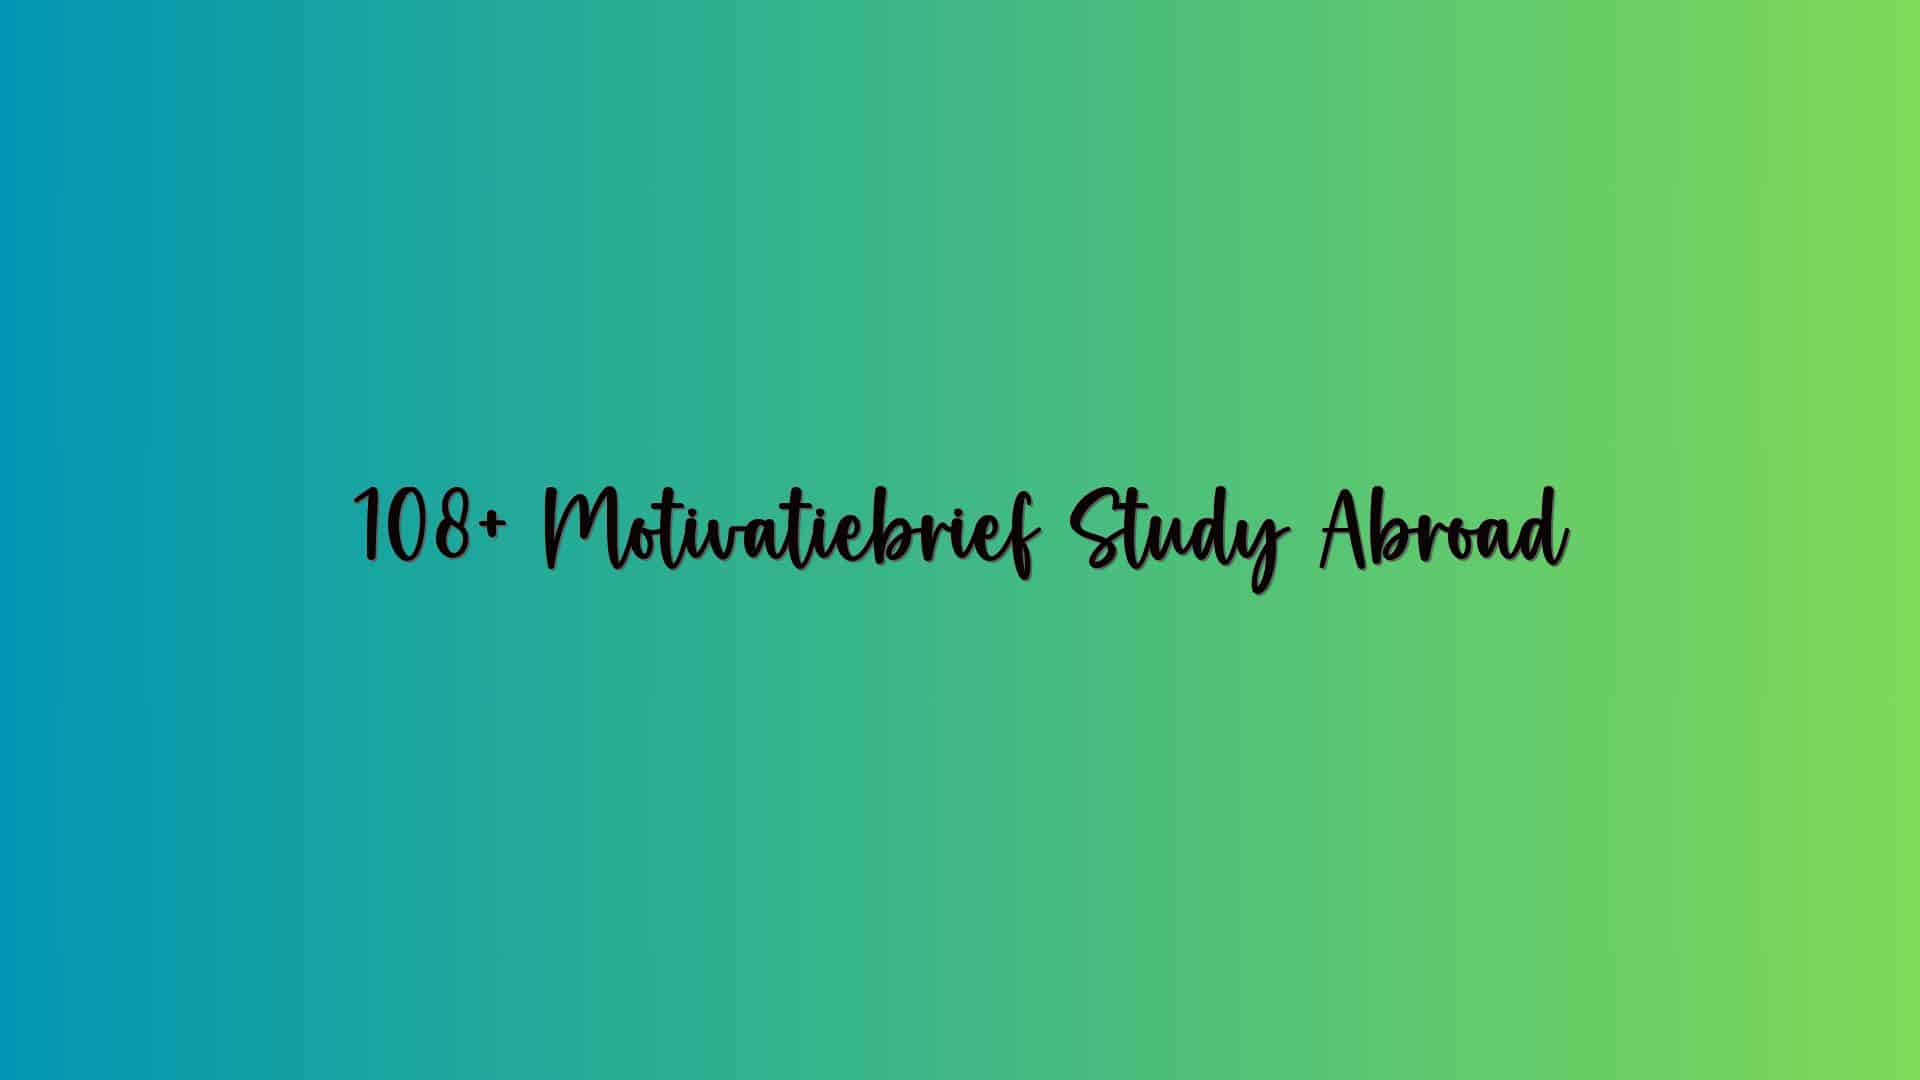 108+ Motivatiebrief Study Abroad